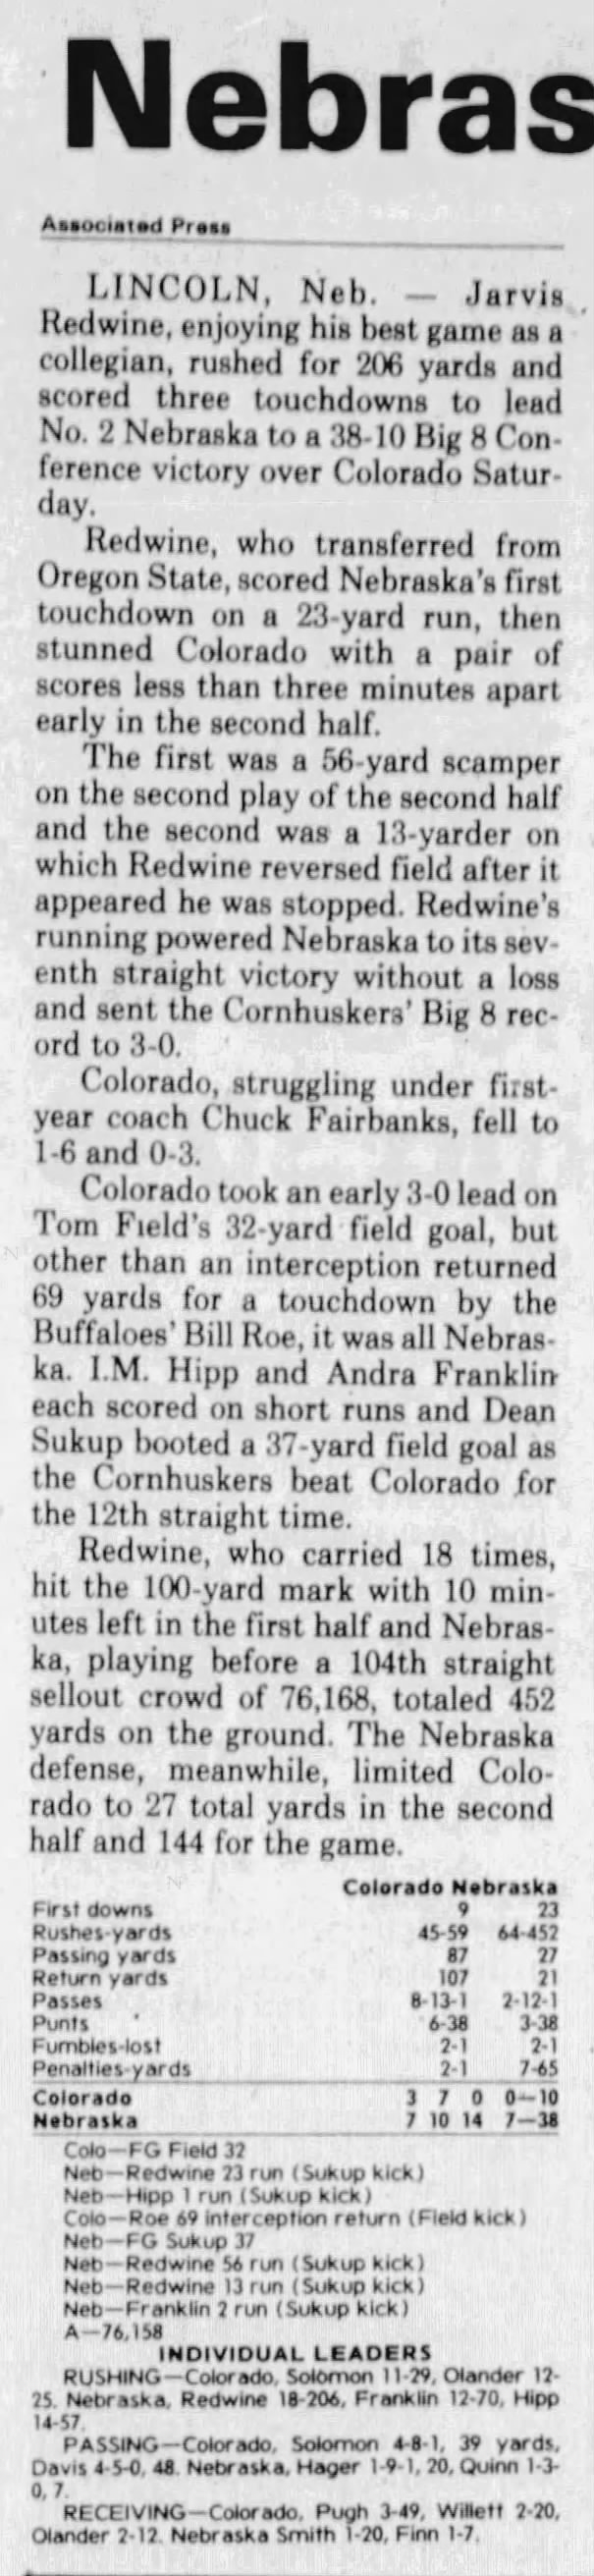 1979 Nebraska-Colorado football AP